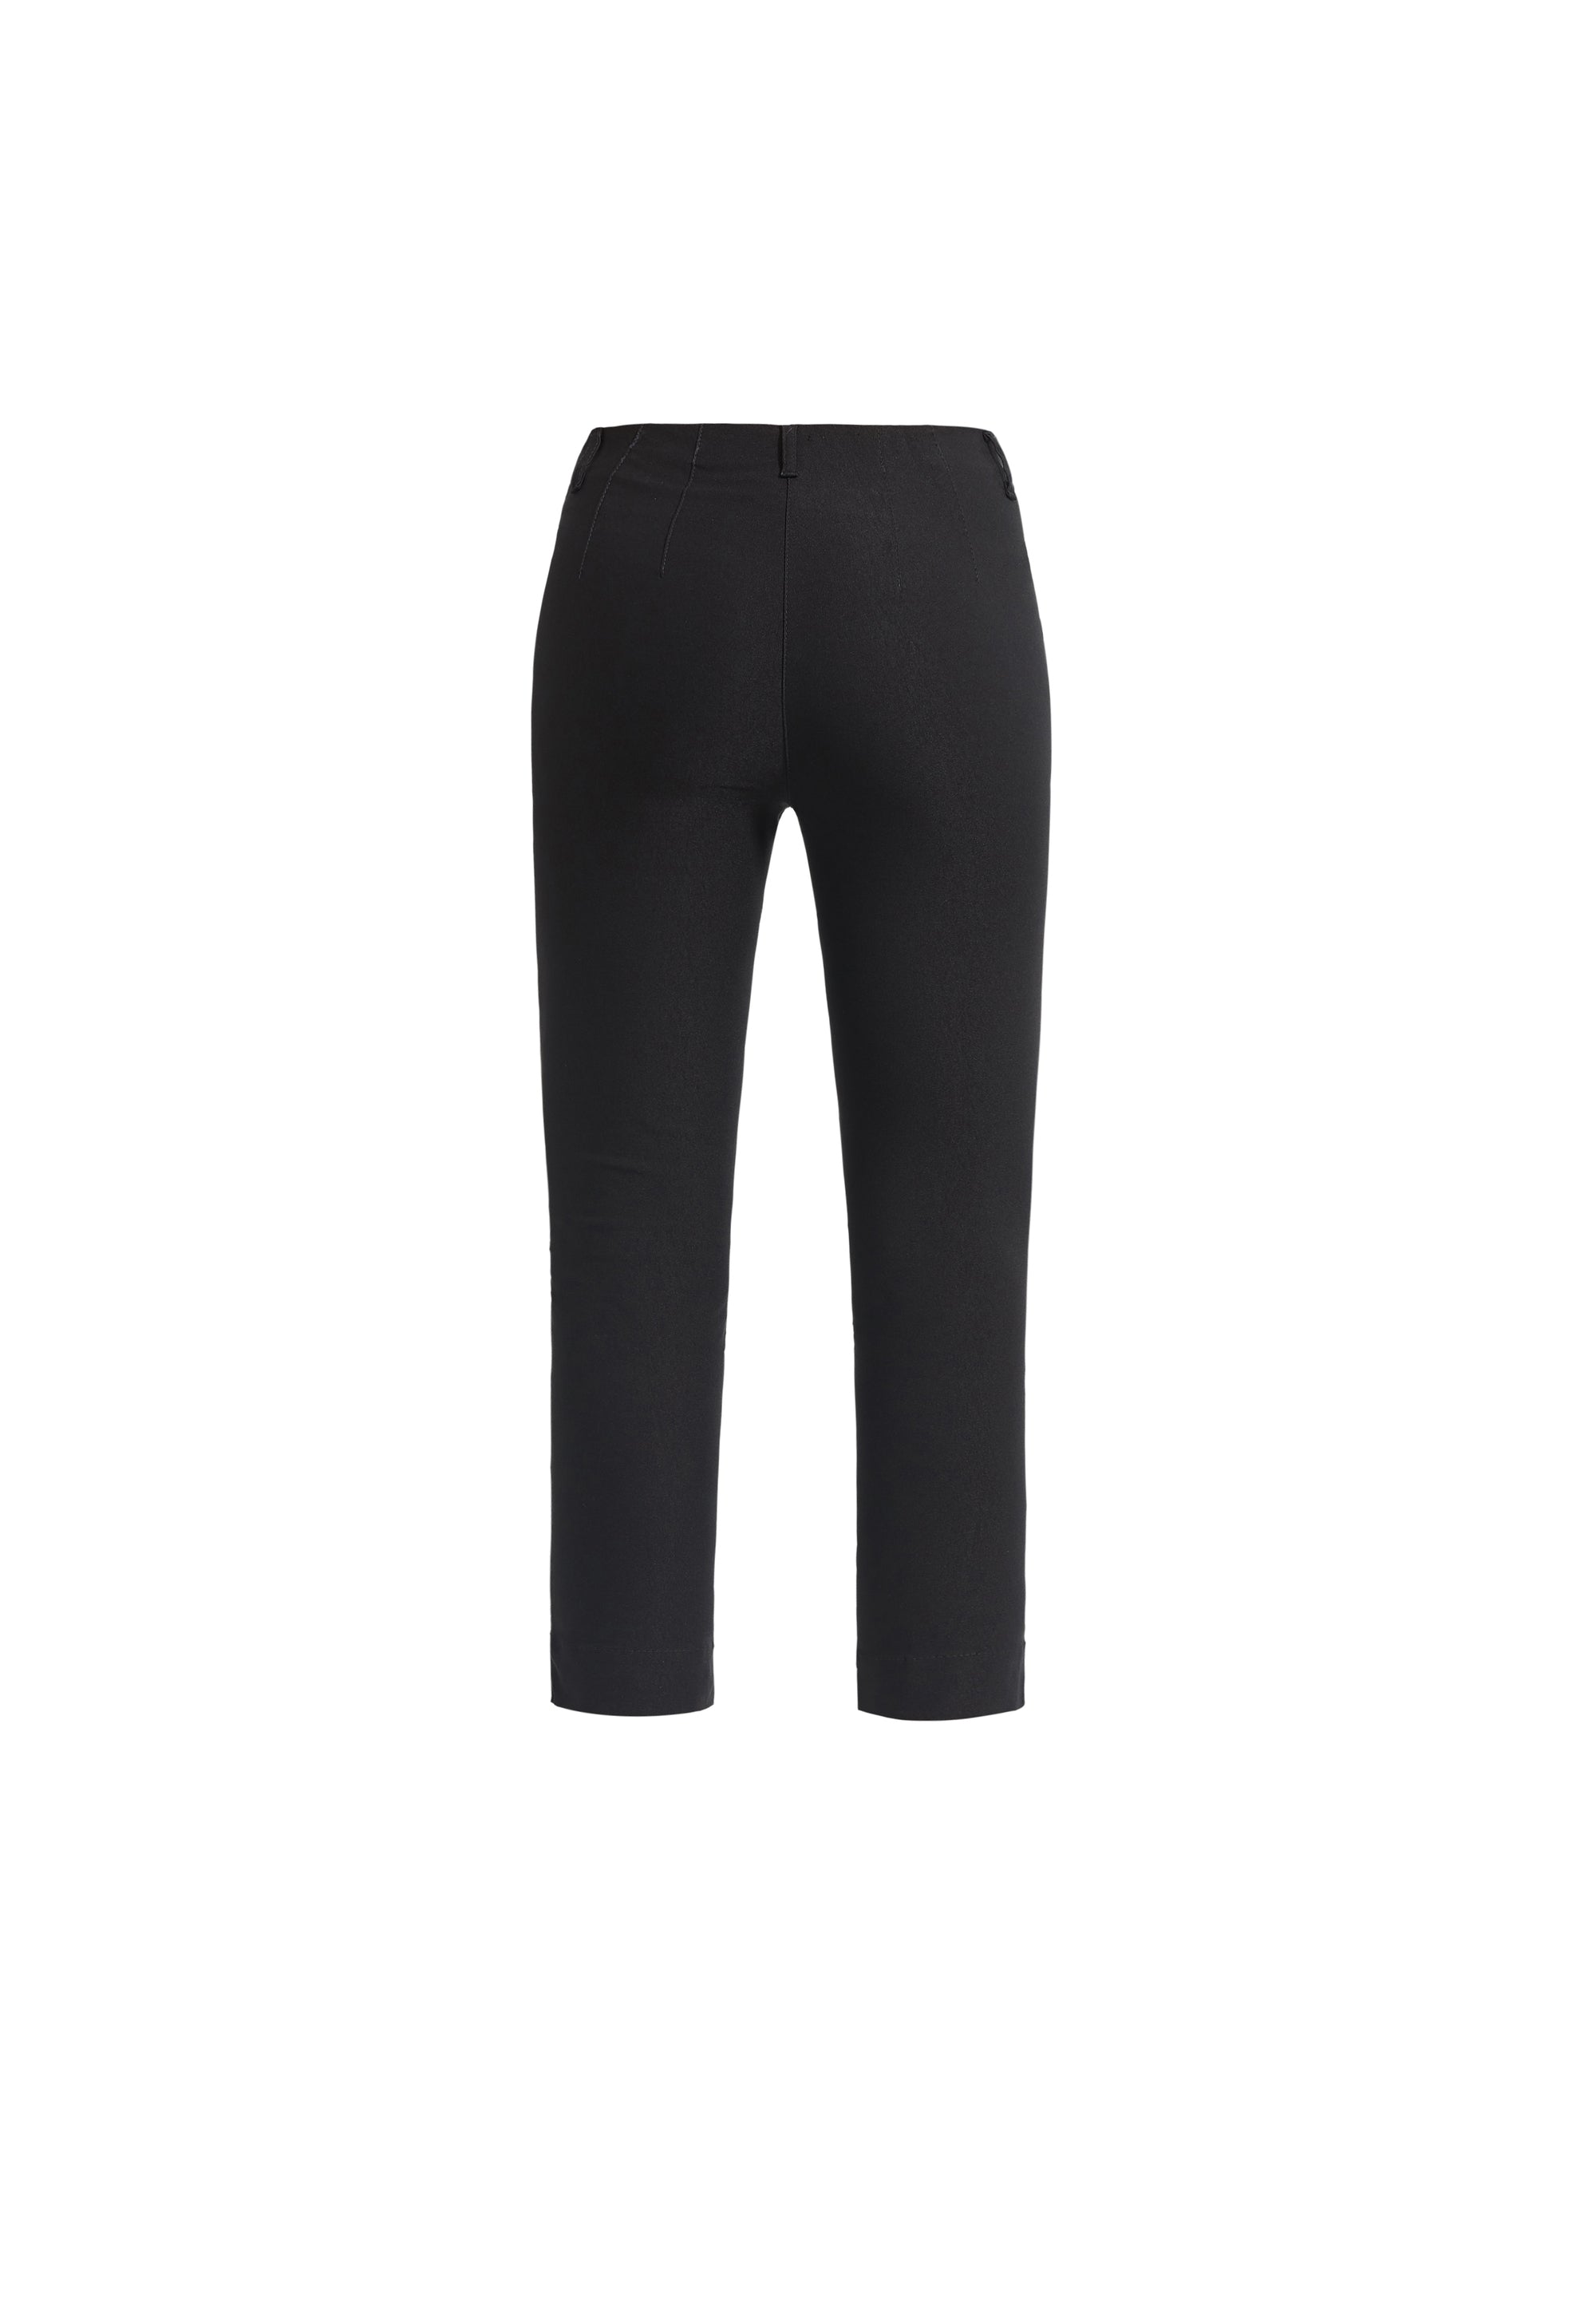 LAURIE Taylor Regular Crop Trousers REGULAR 99000 Black